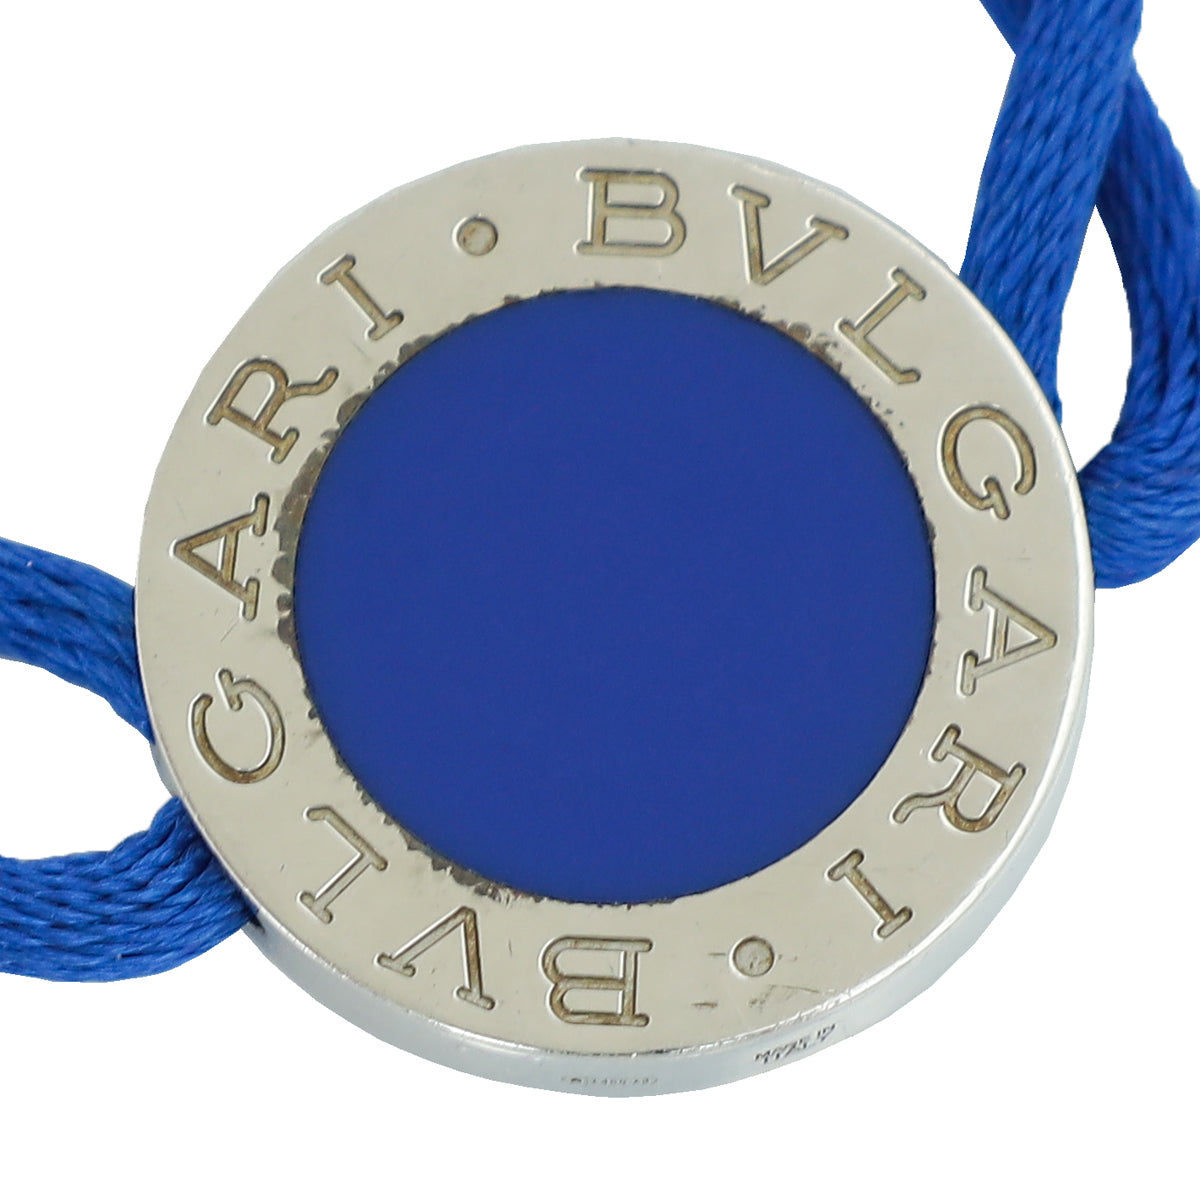 Load image into Gallery viewer, Bvlgari Blue Bvlgari Cord Bracelet
